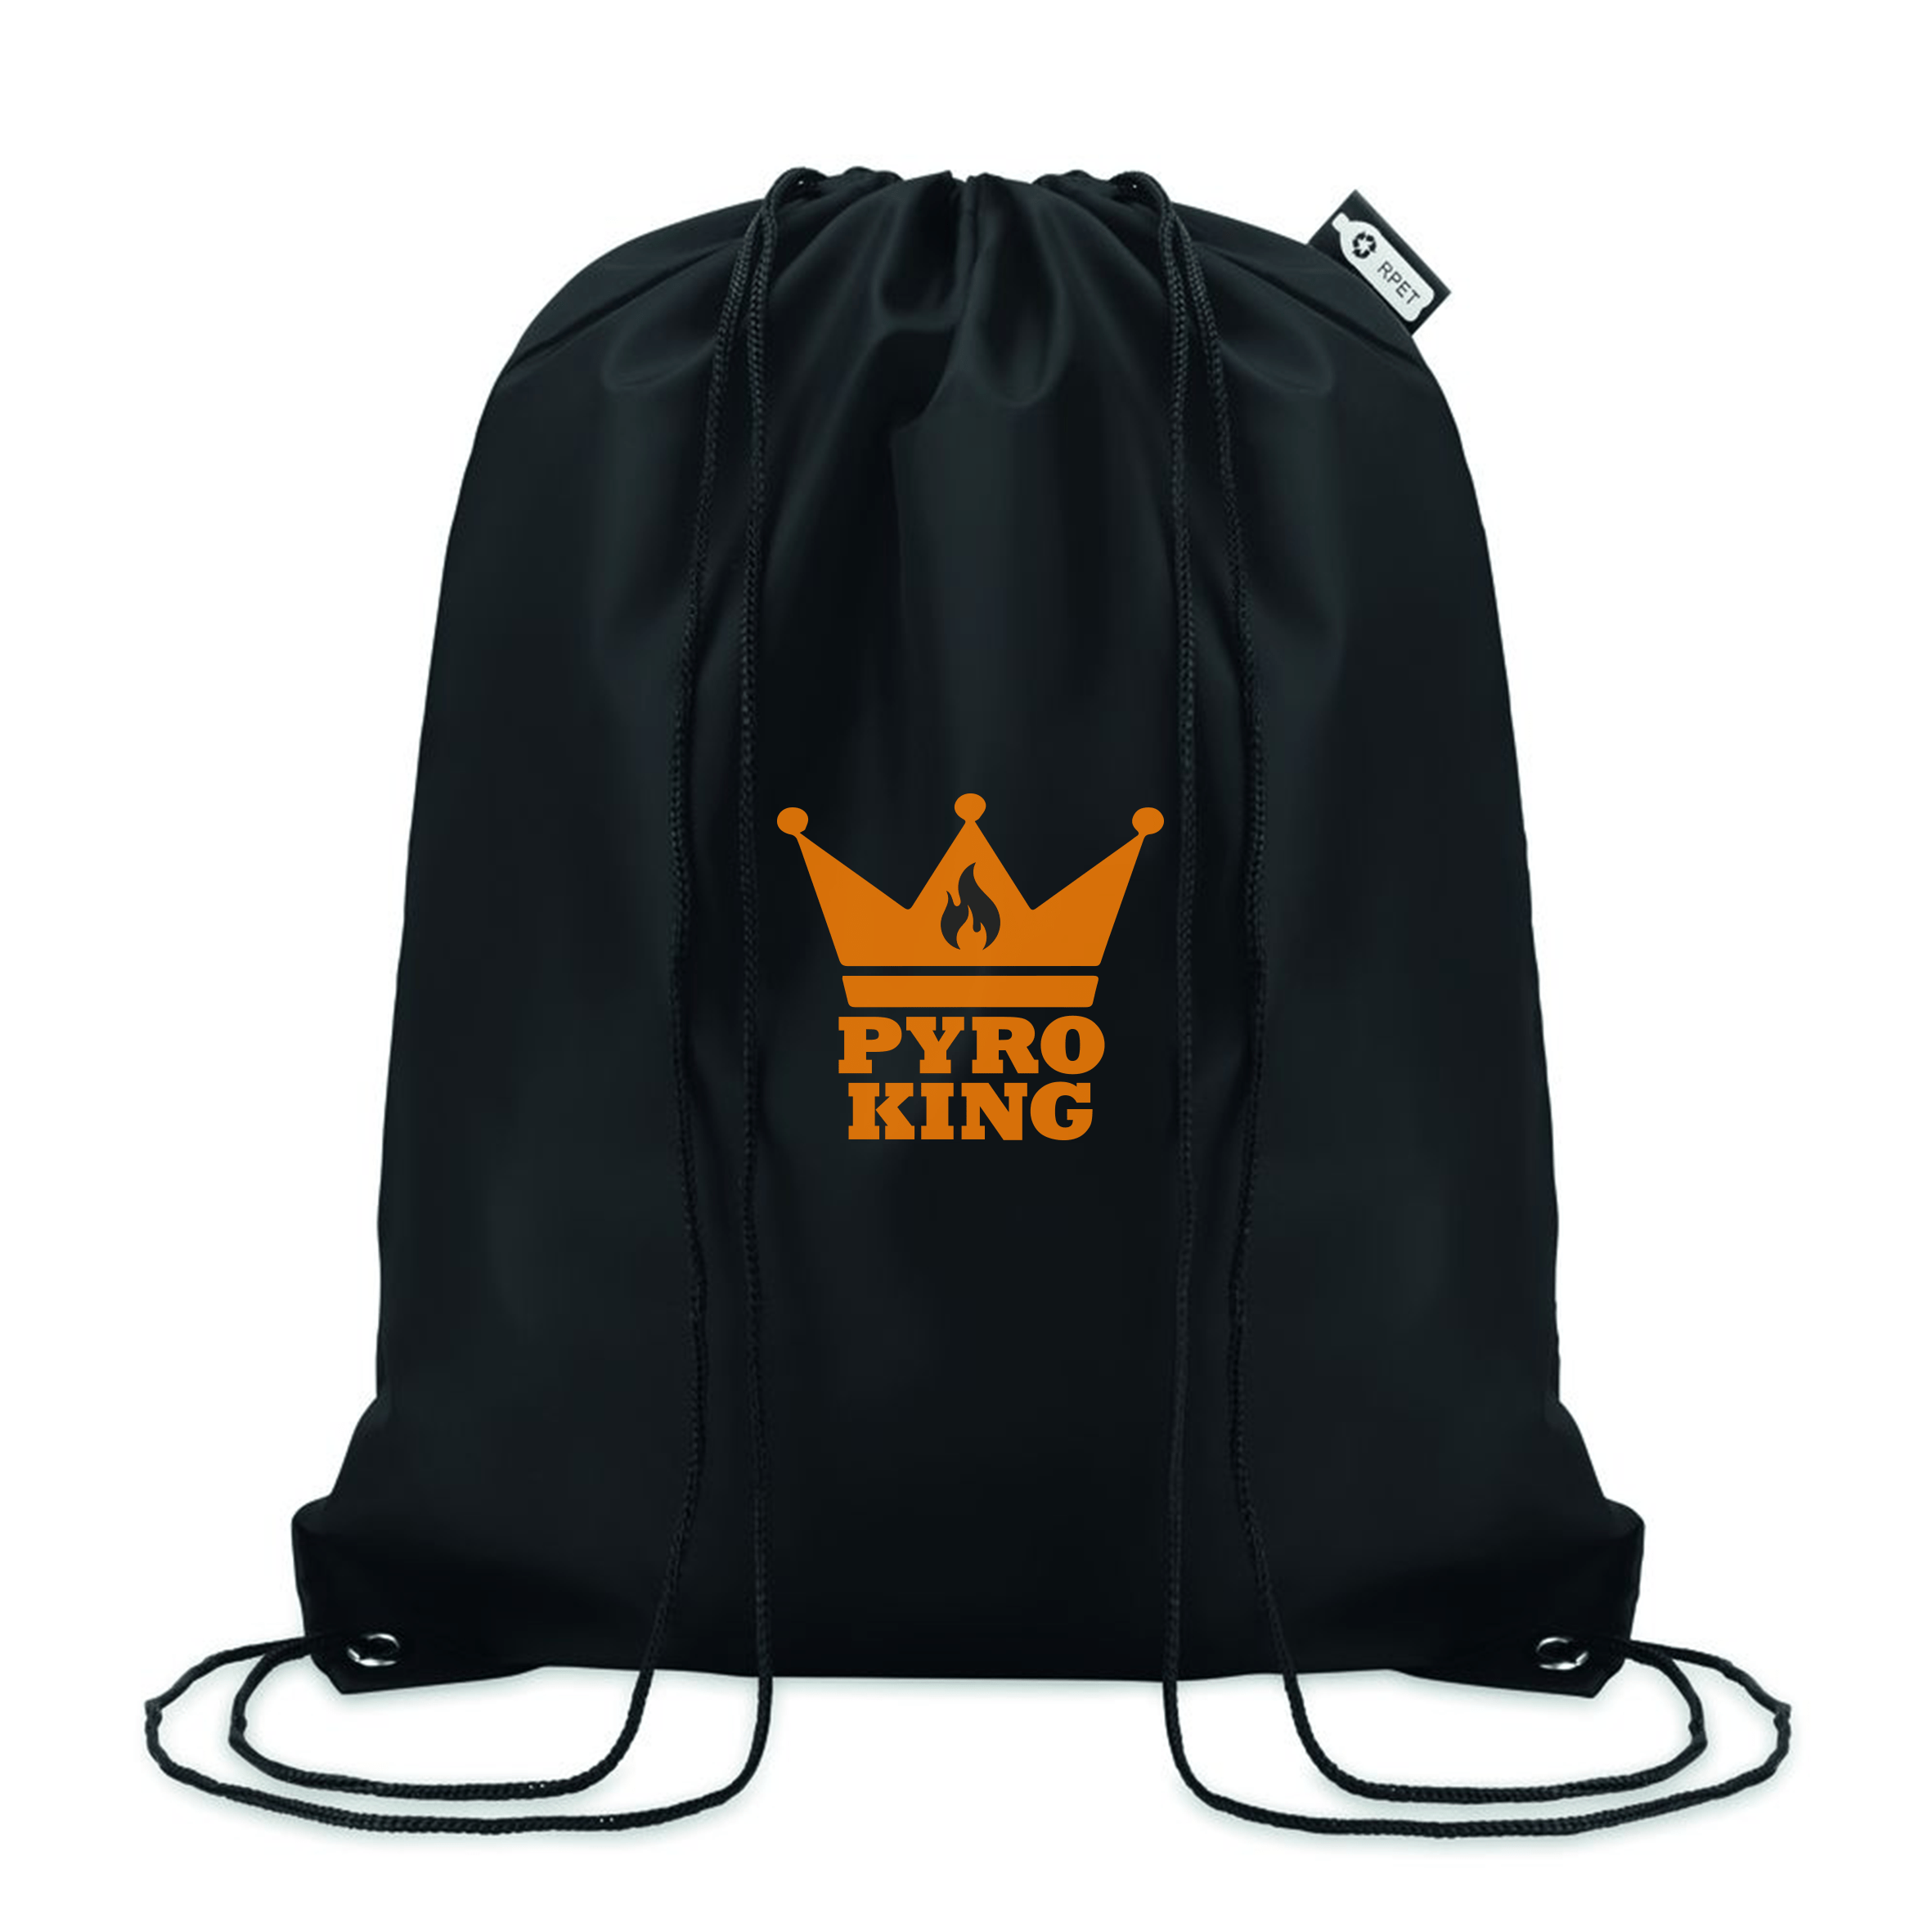 Pyro King backpack black NEW